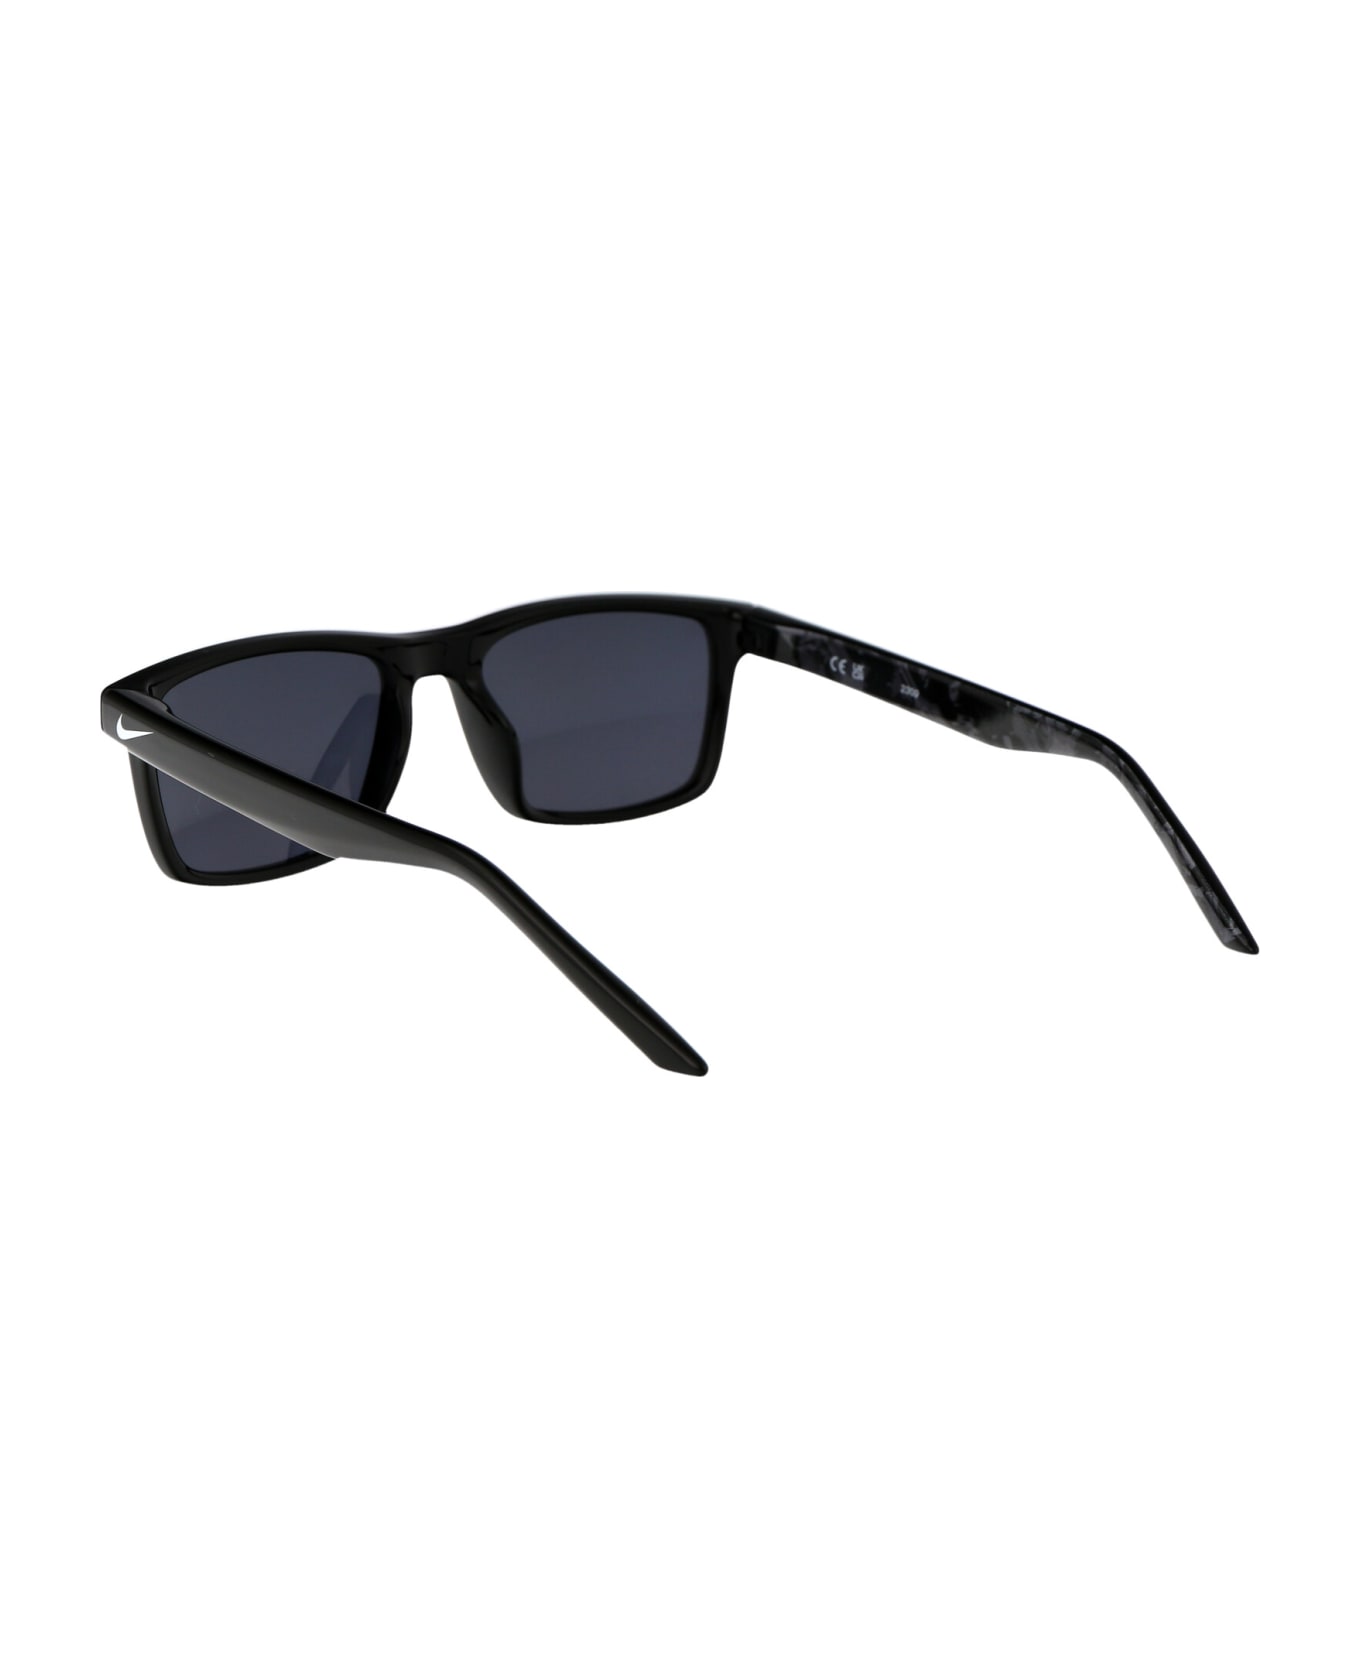 Nike Cheer Sunglasses - 011 BLACK サングラス